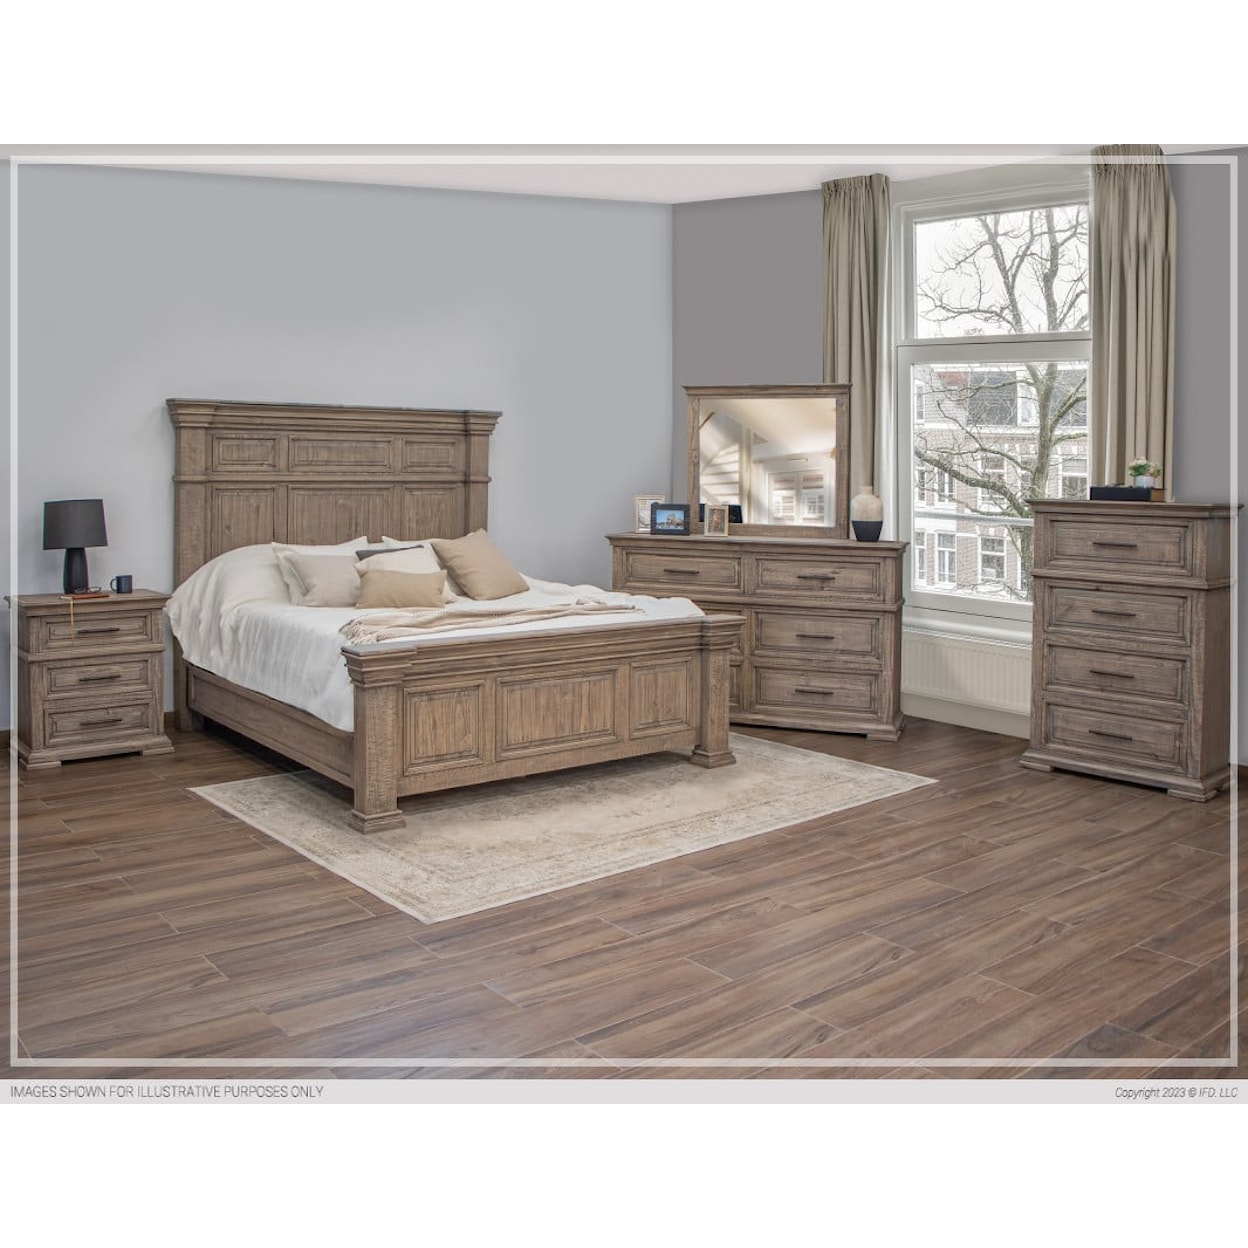 International Furniture Direct Royal Traditional 5-Piece King Bedroom Set